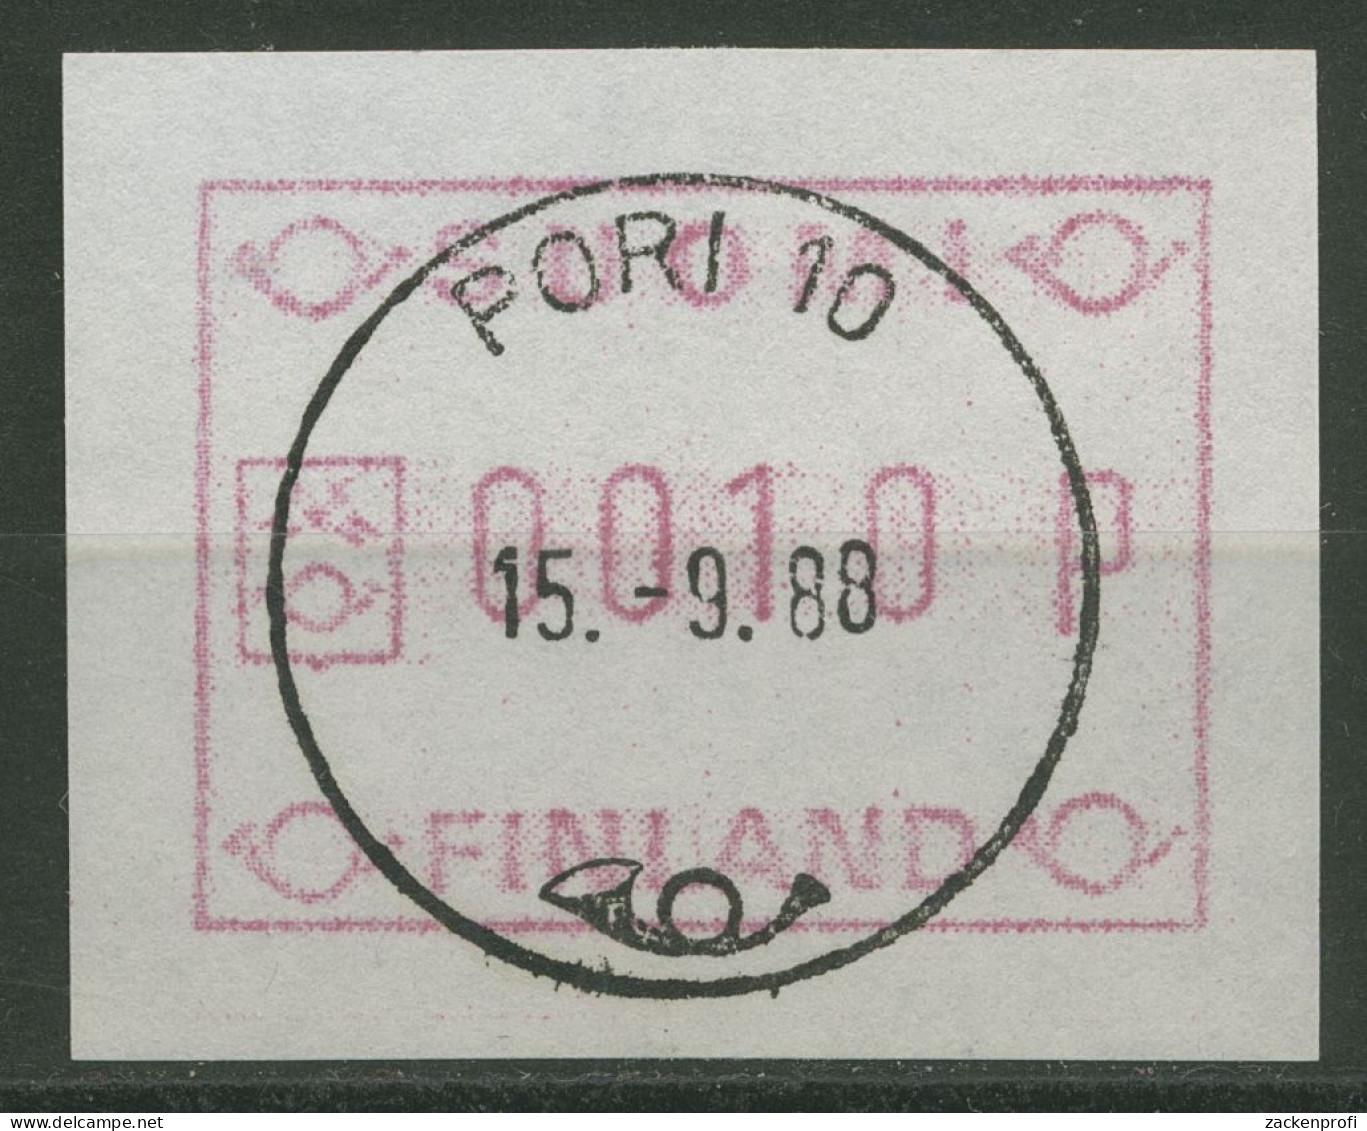 Finnland ATM 1982 Kl. Posthörner Einzelwert Weißes Papier ATM 1.1 XI Gestempelt - Machine Labels [ATM]